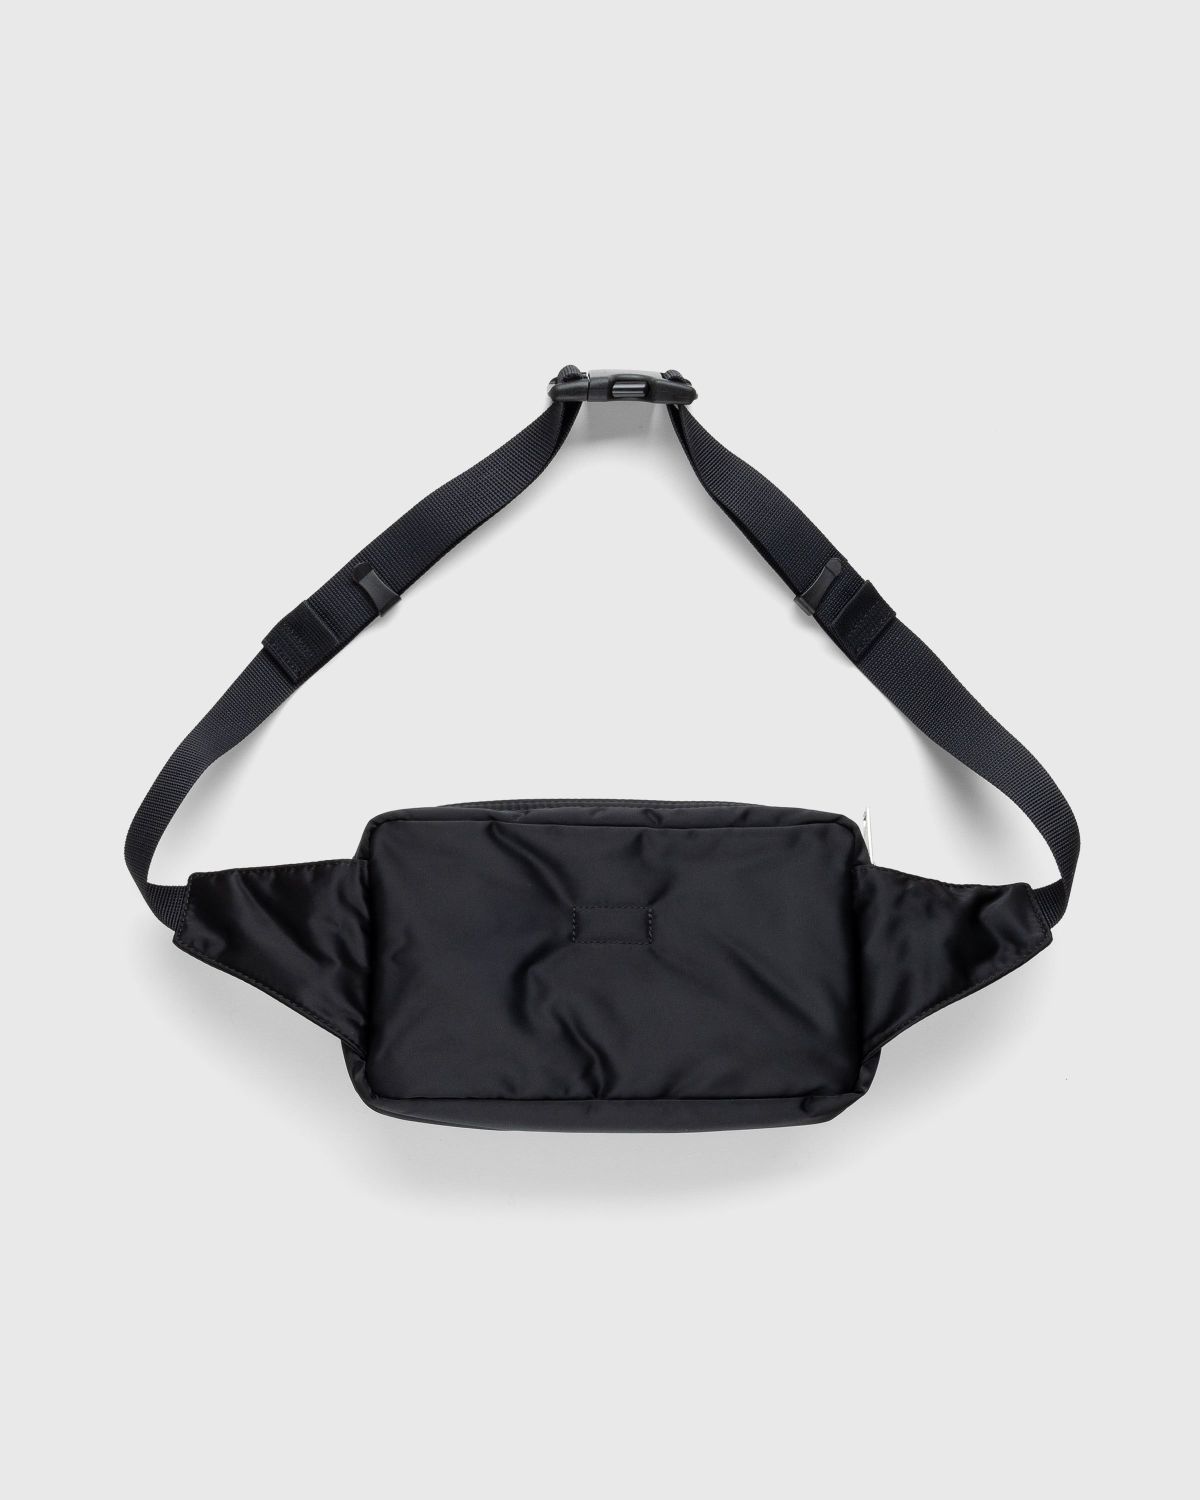 Porter-Yoshida & Co. – Tanker Waist Bag Black - One Size